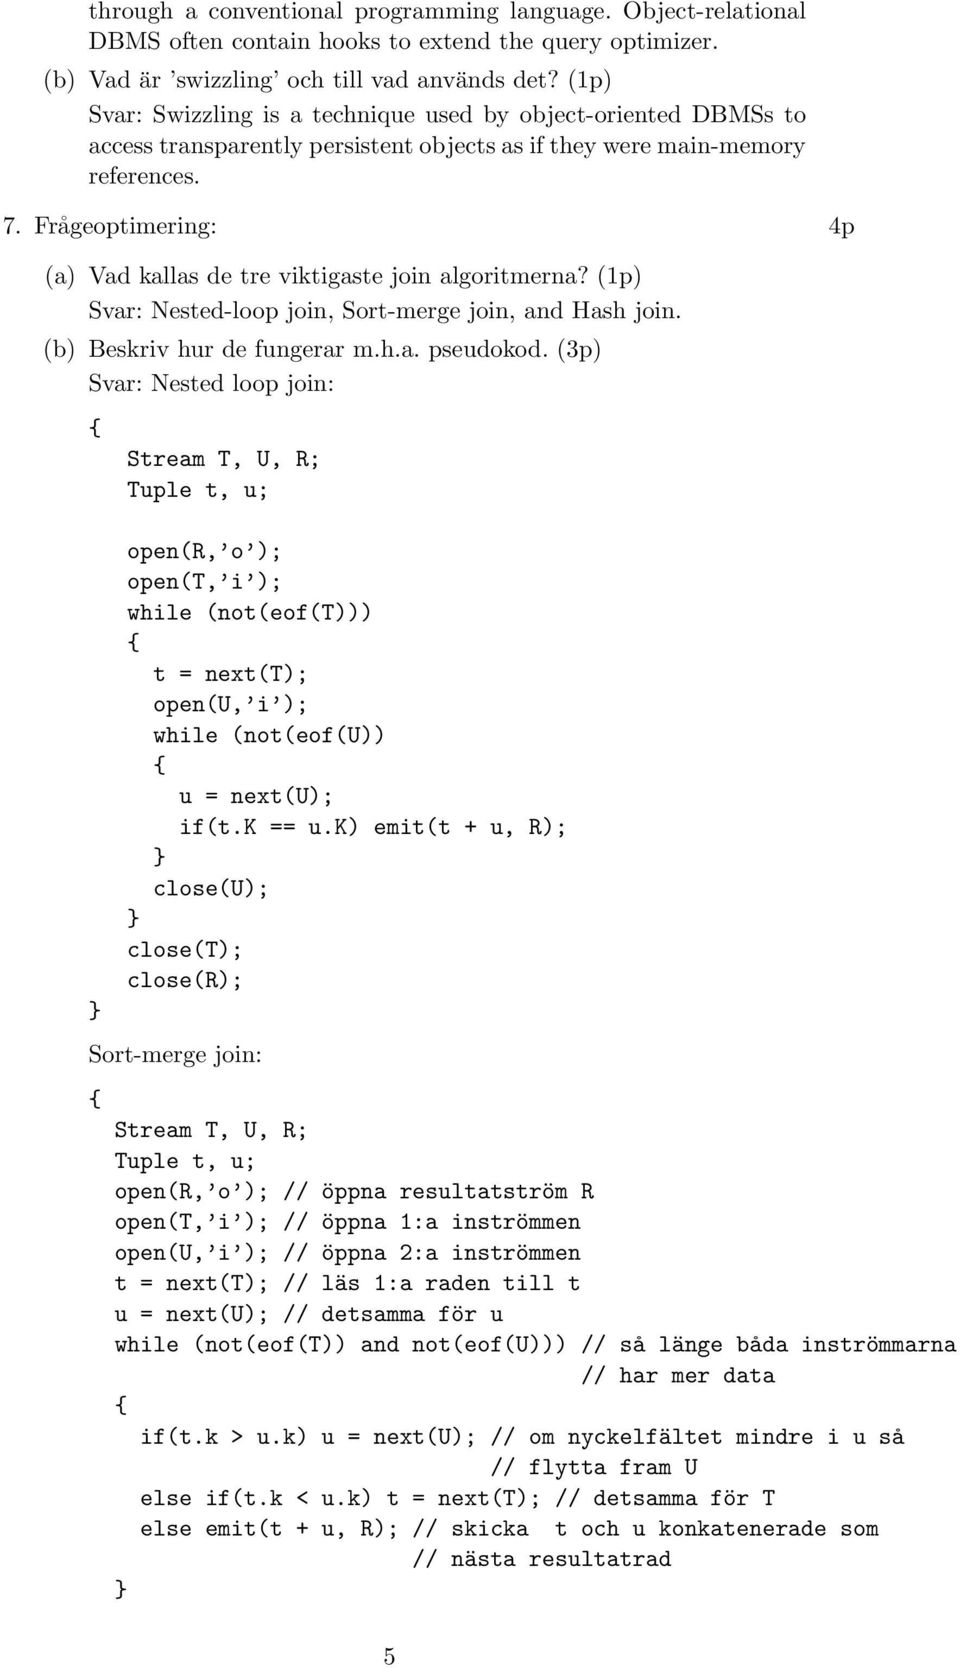 Frågeoptimering: 4p (a) Vad kallas de tre viktigaste join algoritmerna? (1p) Nested-loop join, Sort-merge join, and Hash join. (b) Beskriv hur de fungerar m.h.a. pseudokod.